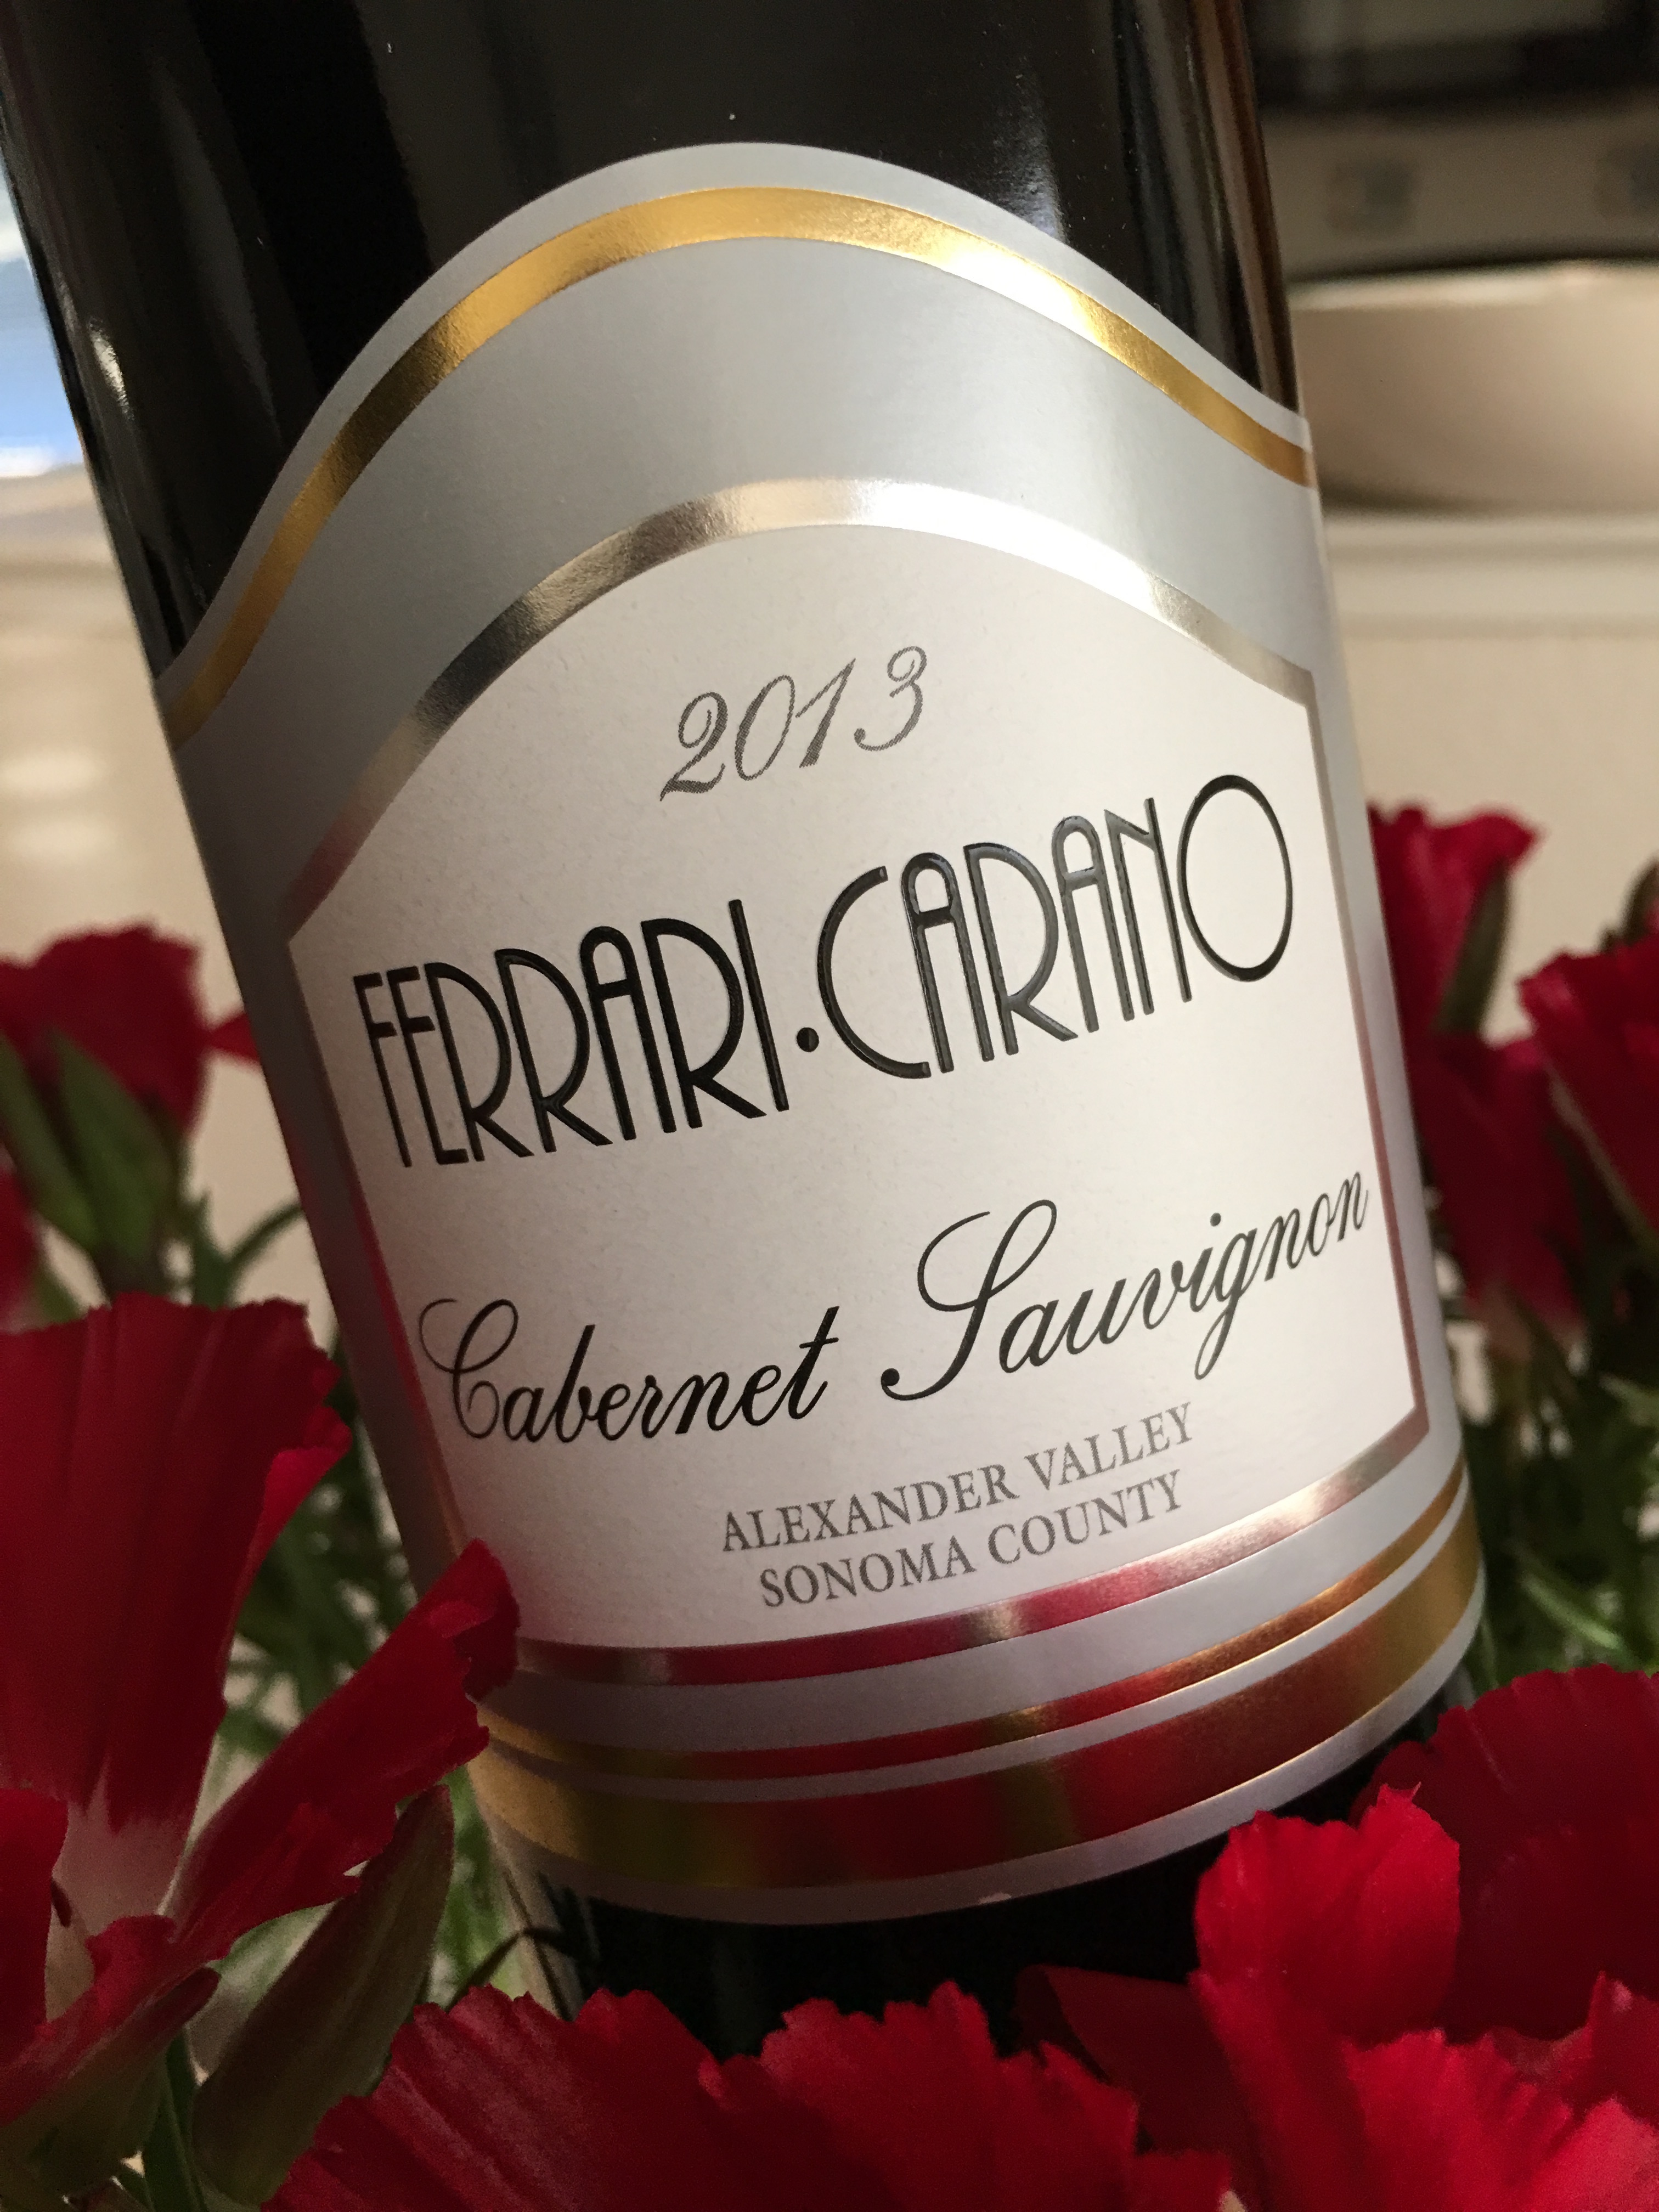 Wine Time Ferrari Carano 2013 Alexander Valley Cabernet Sauvignon